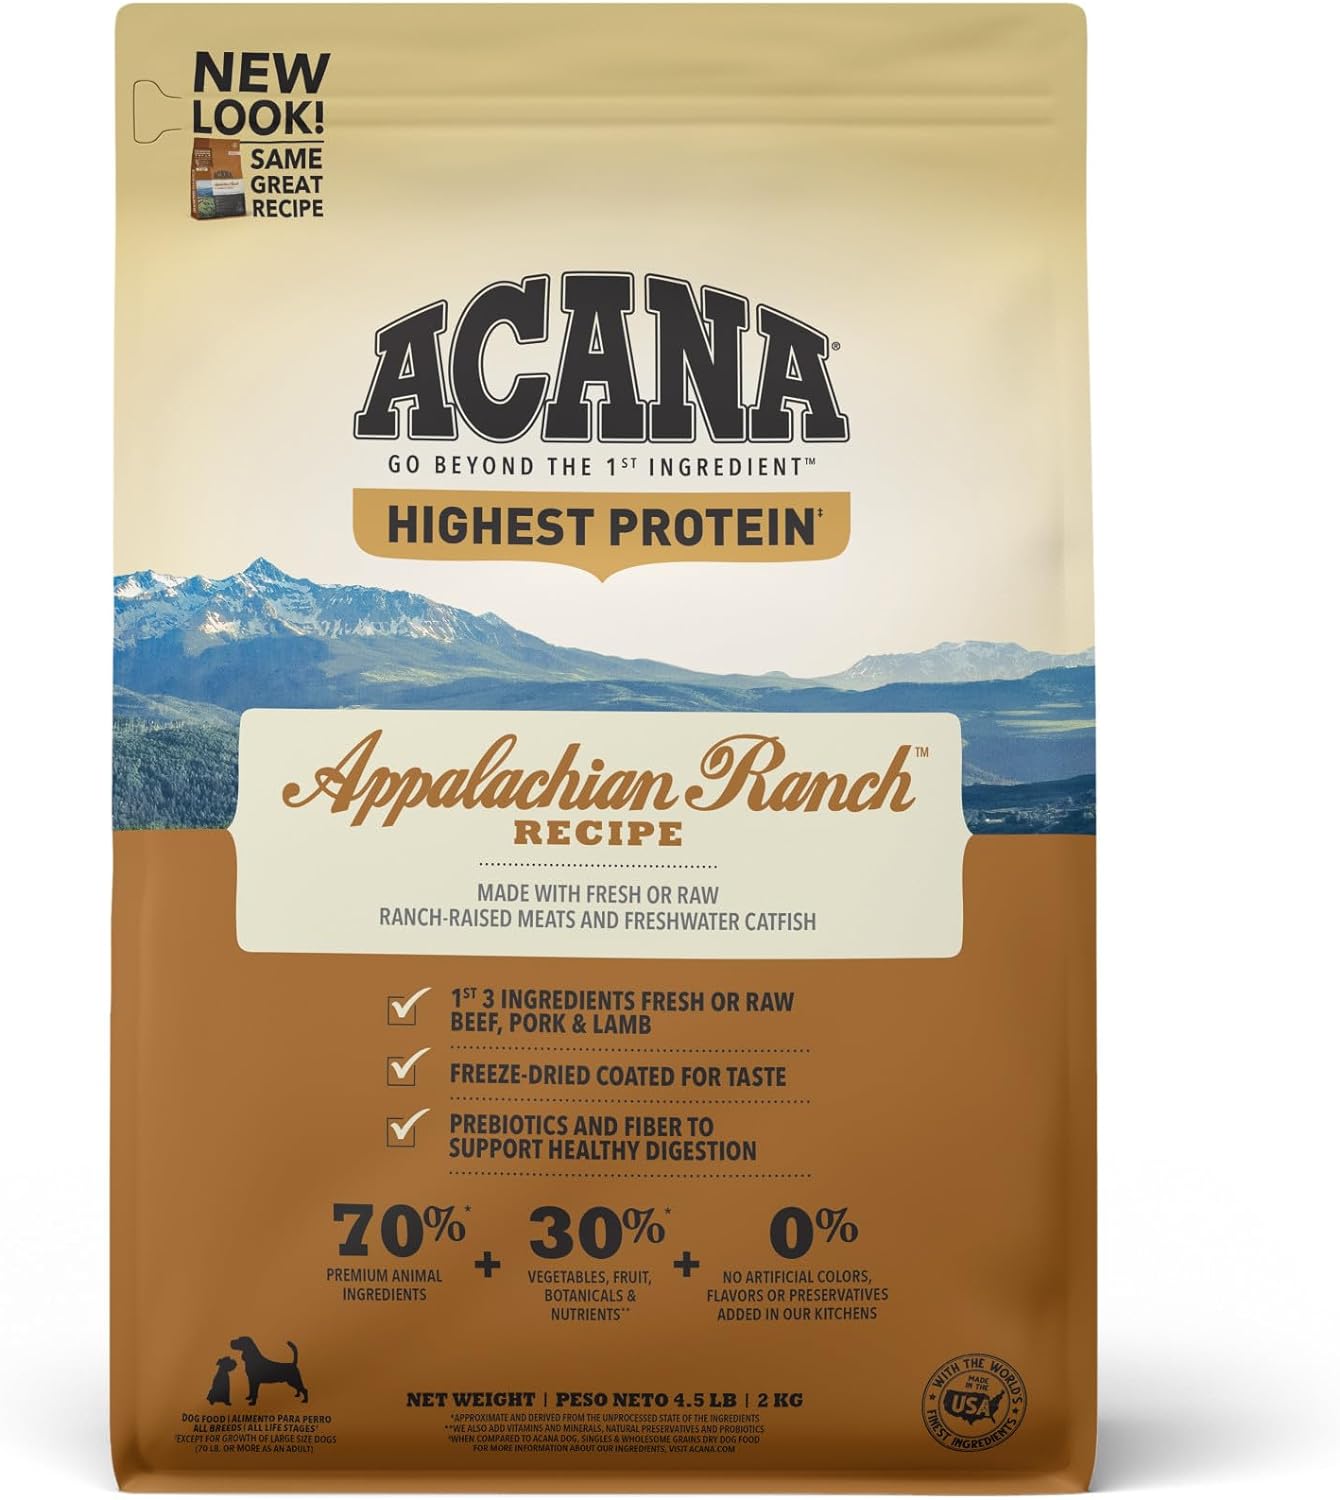 Acana Highest Protein Appalachian Ranch Recipe Dry Dog Food – Gallery Image 1